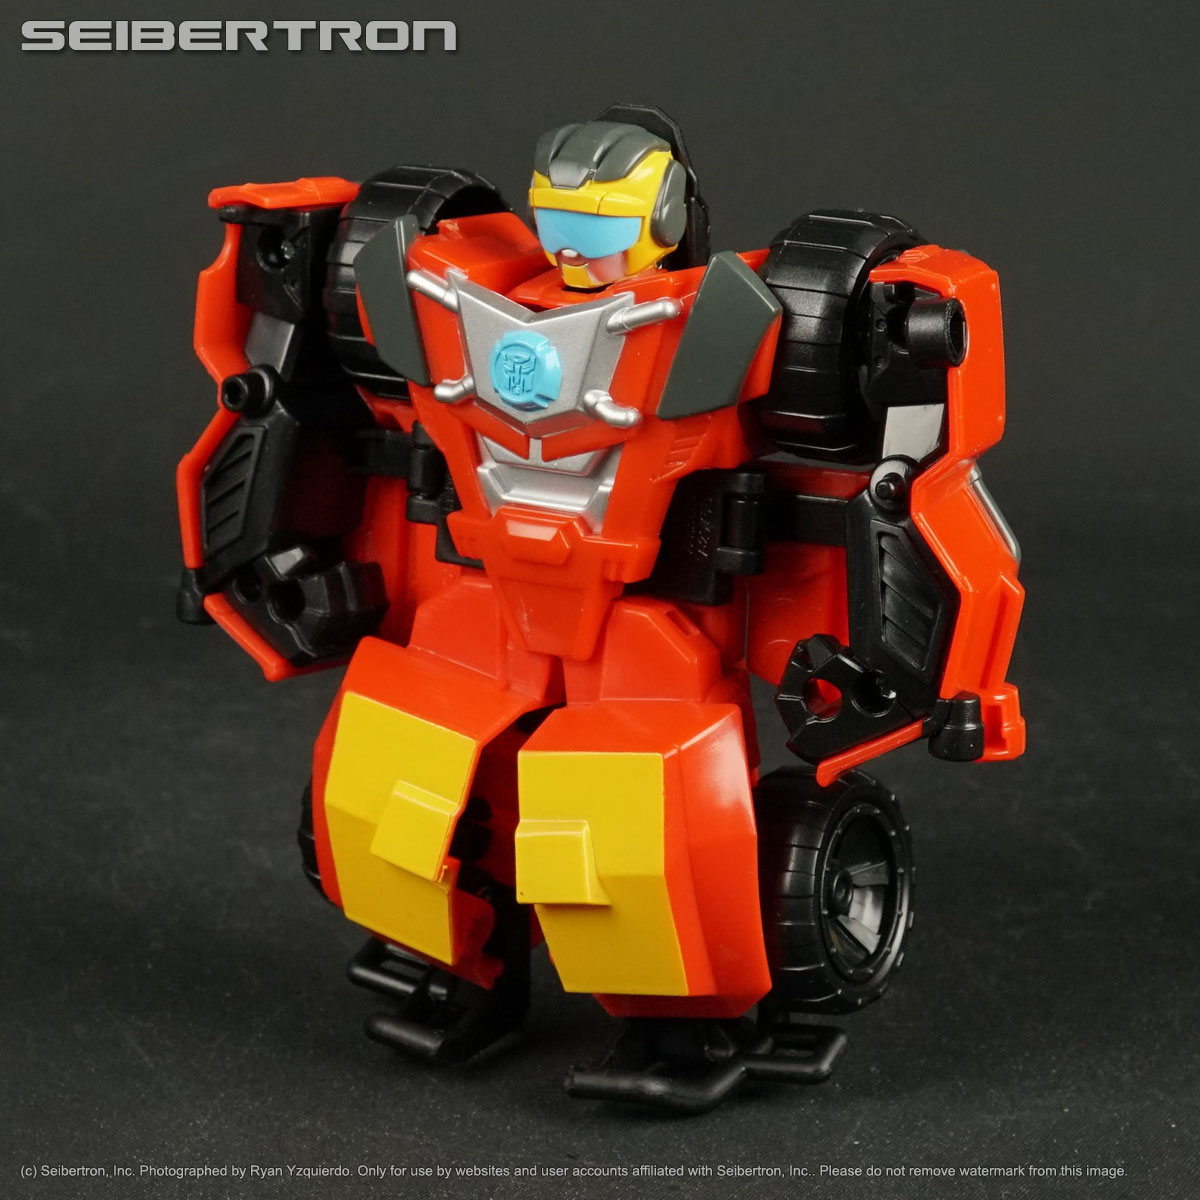 Rescan HOT SHOT (offroad vehicle) Transformer Rescue Bots Academy 2019 Playskool